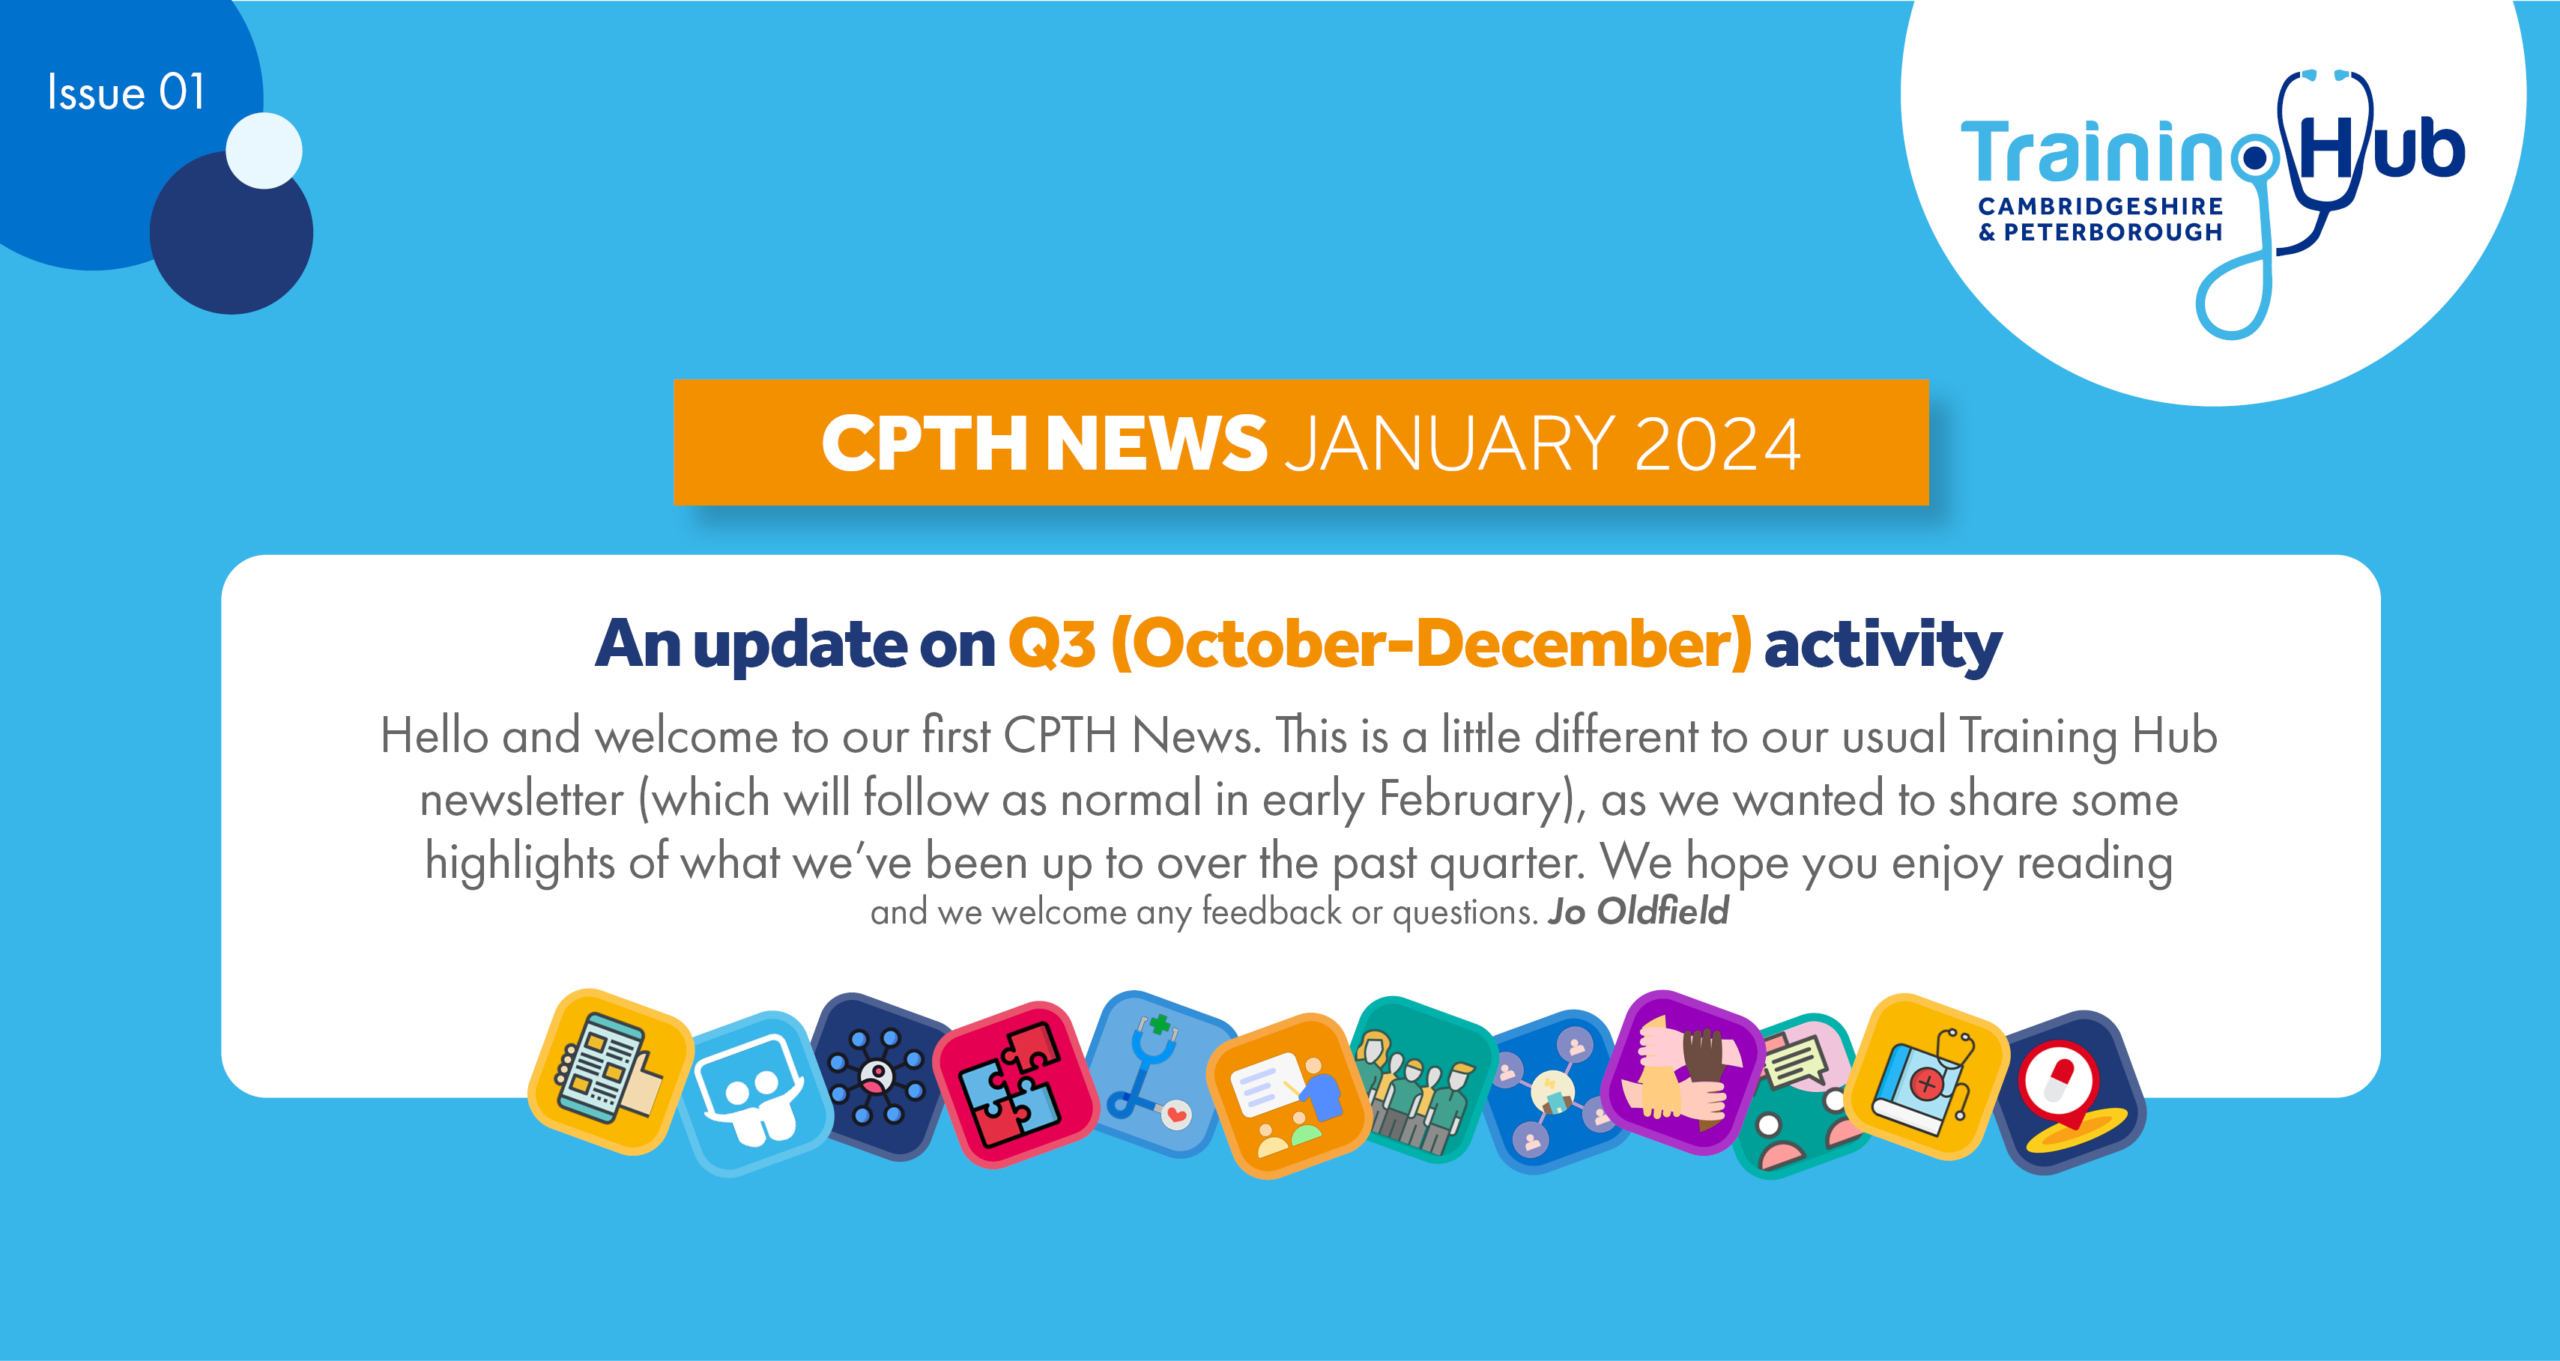 CPTH News 01 January 2024 Image card